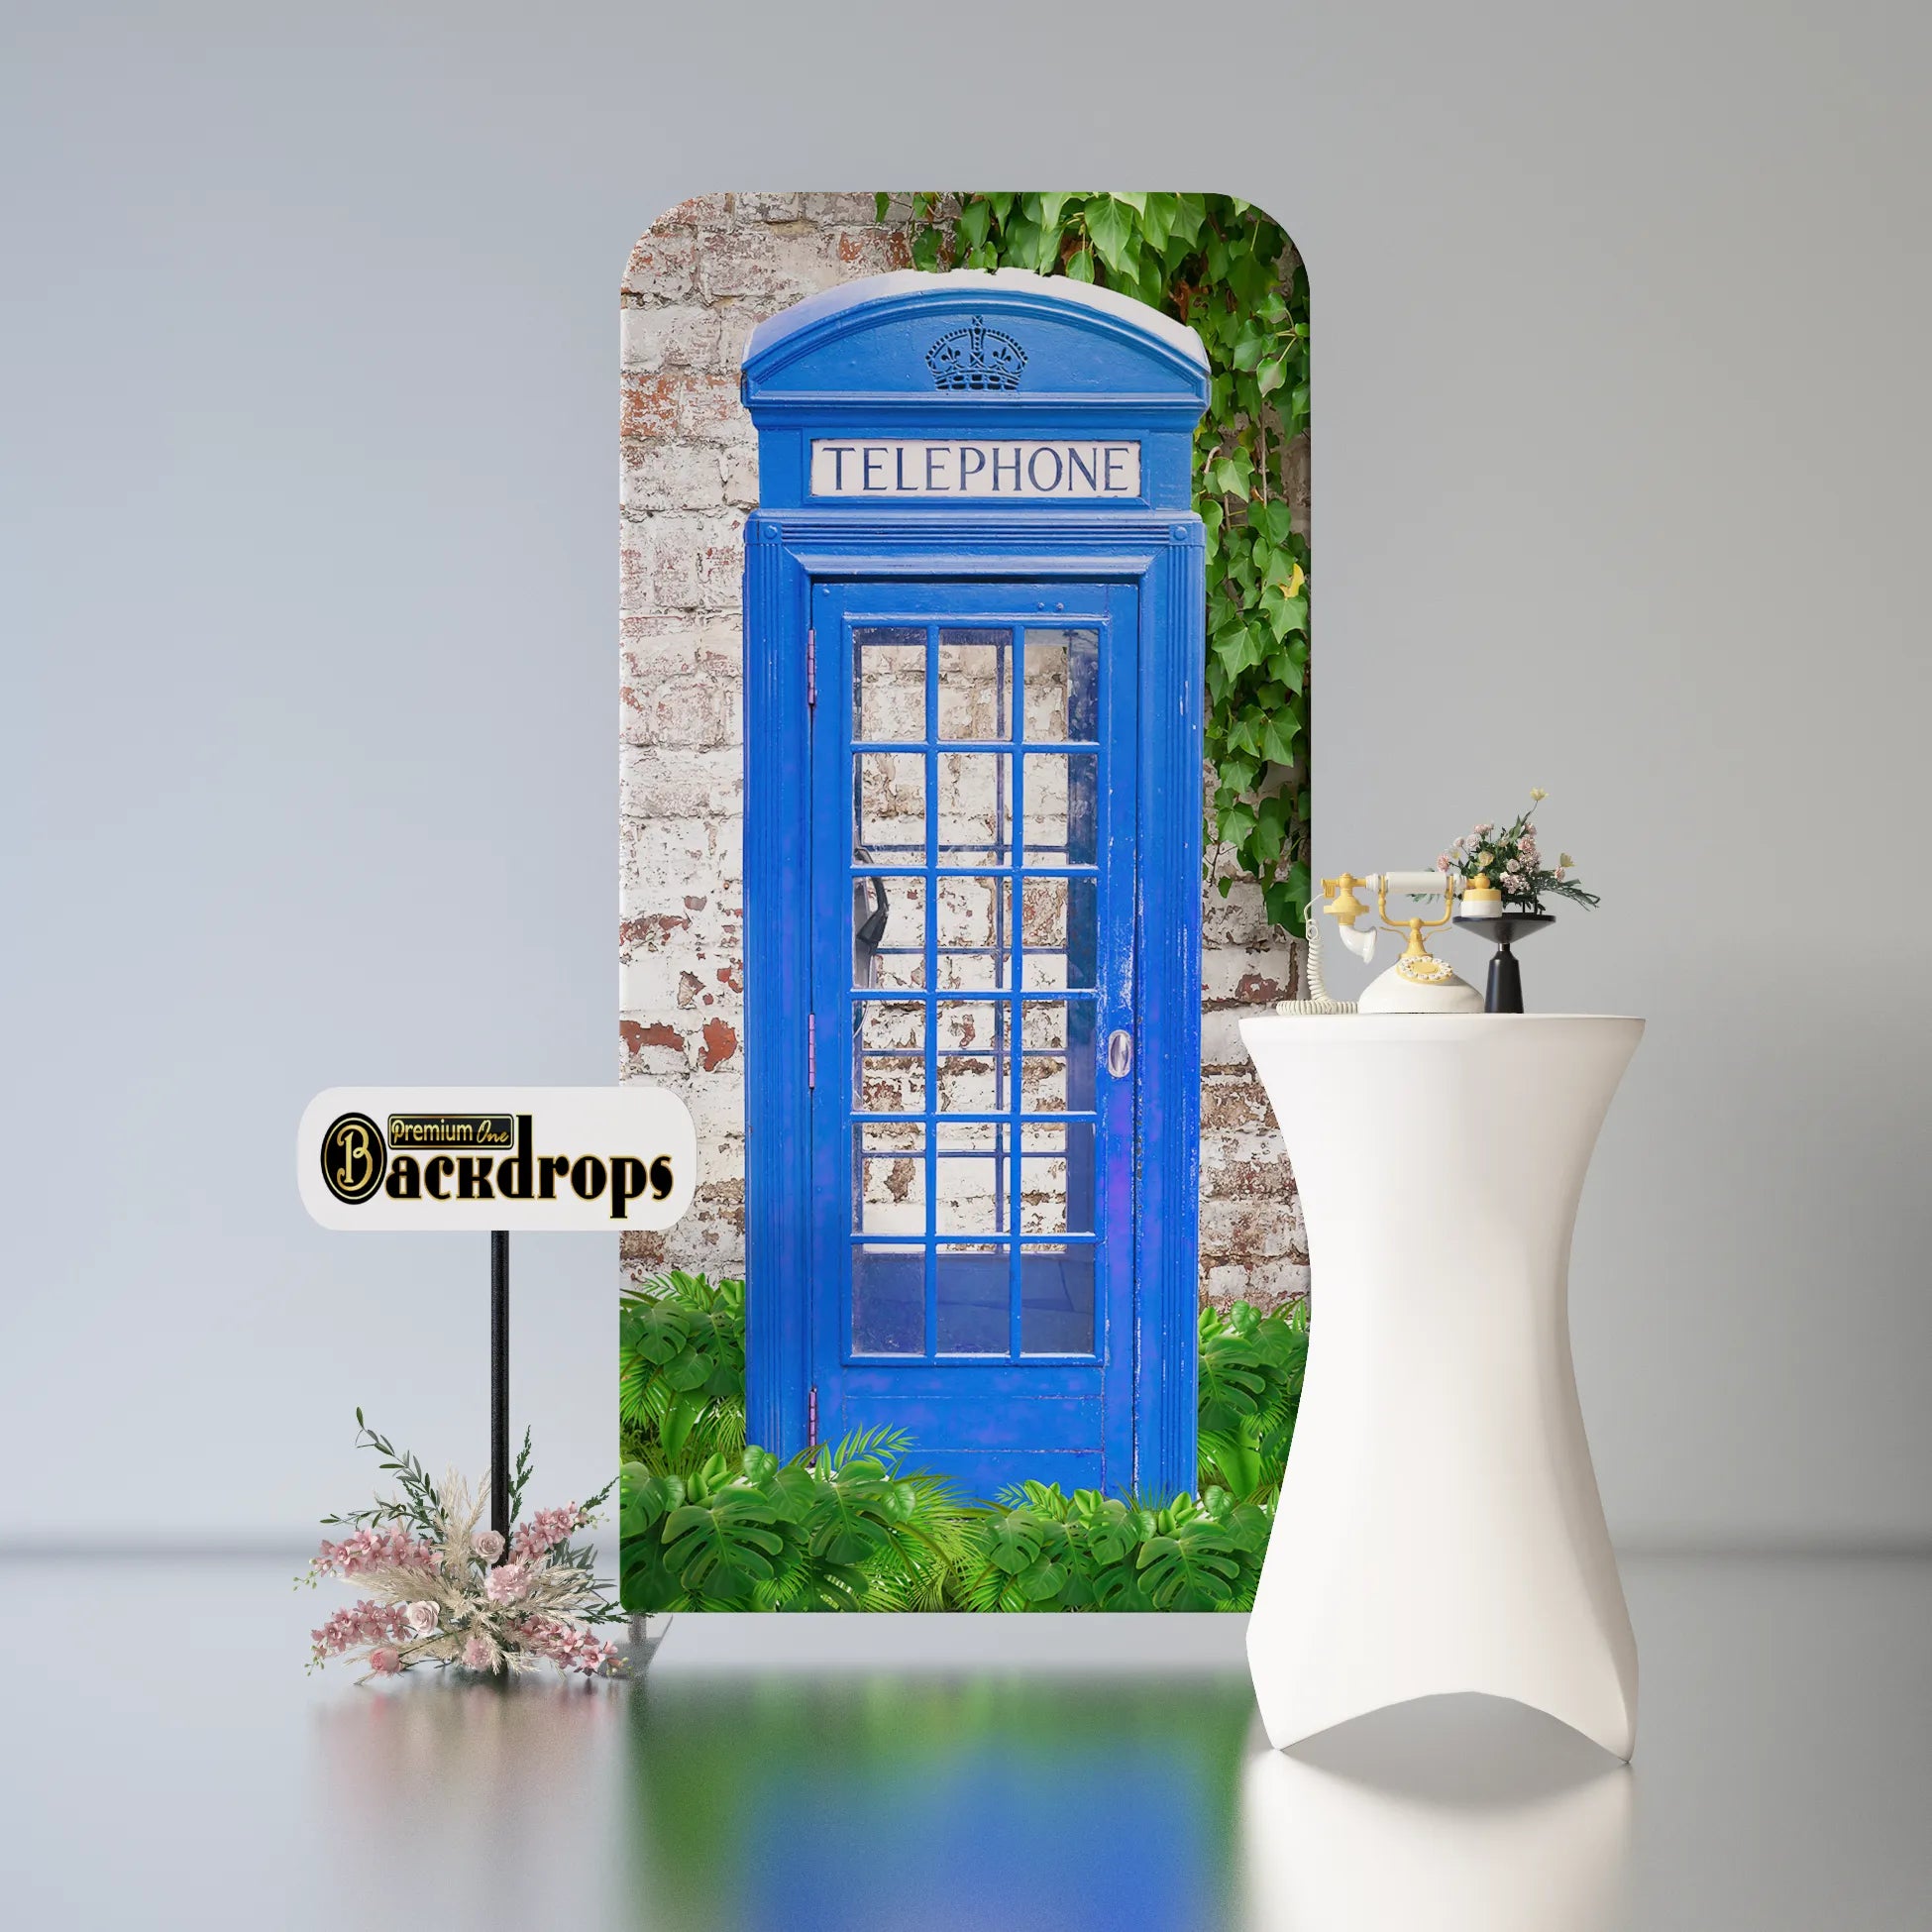 Telephone Booth Design 39